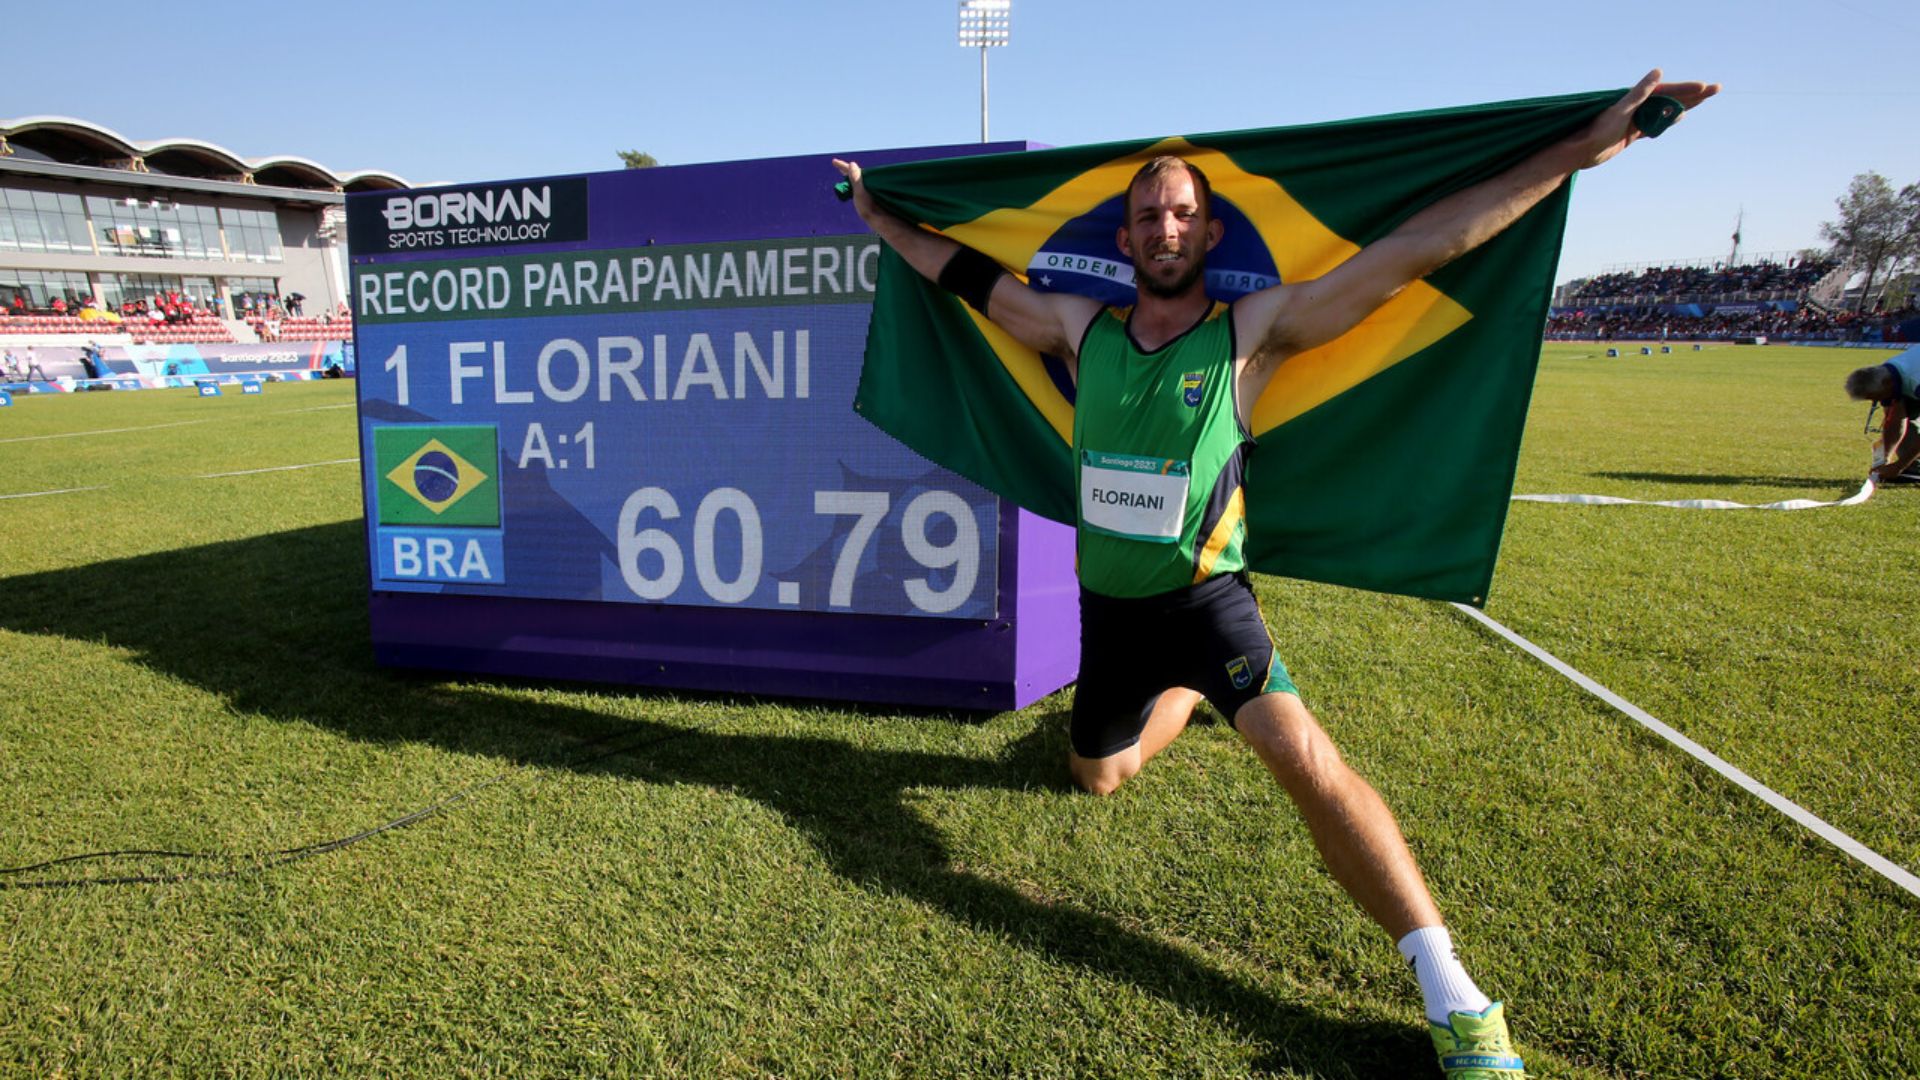 Brasil consigue nuevo récord parapanamericano en jabalina F64